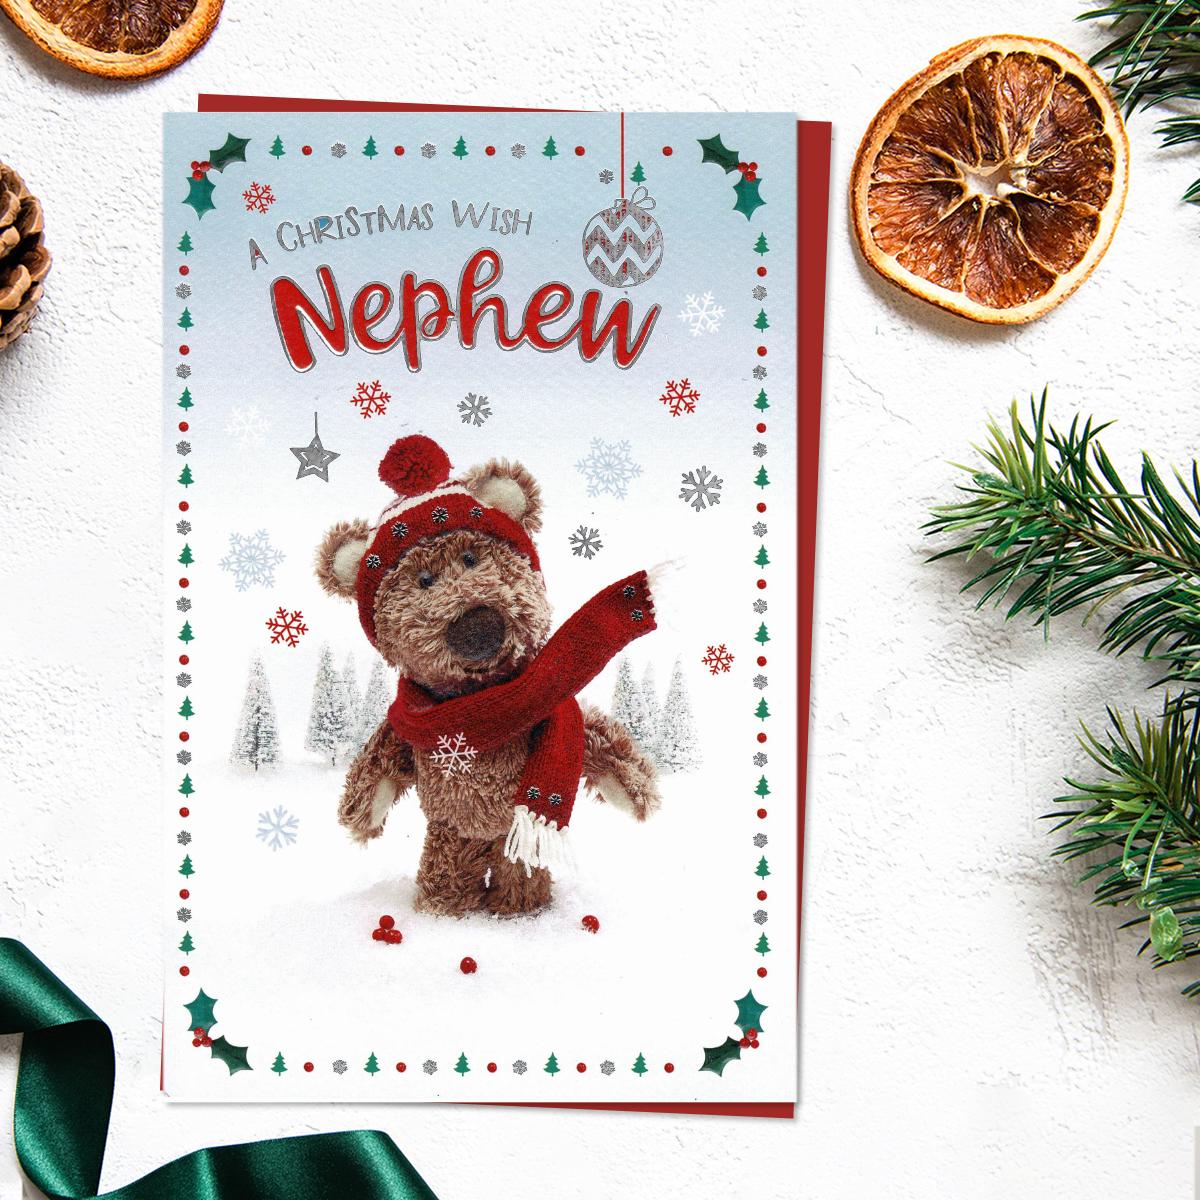 Wonderful Nephew Christmas Card Alongside Its Red Envelope